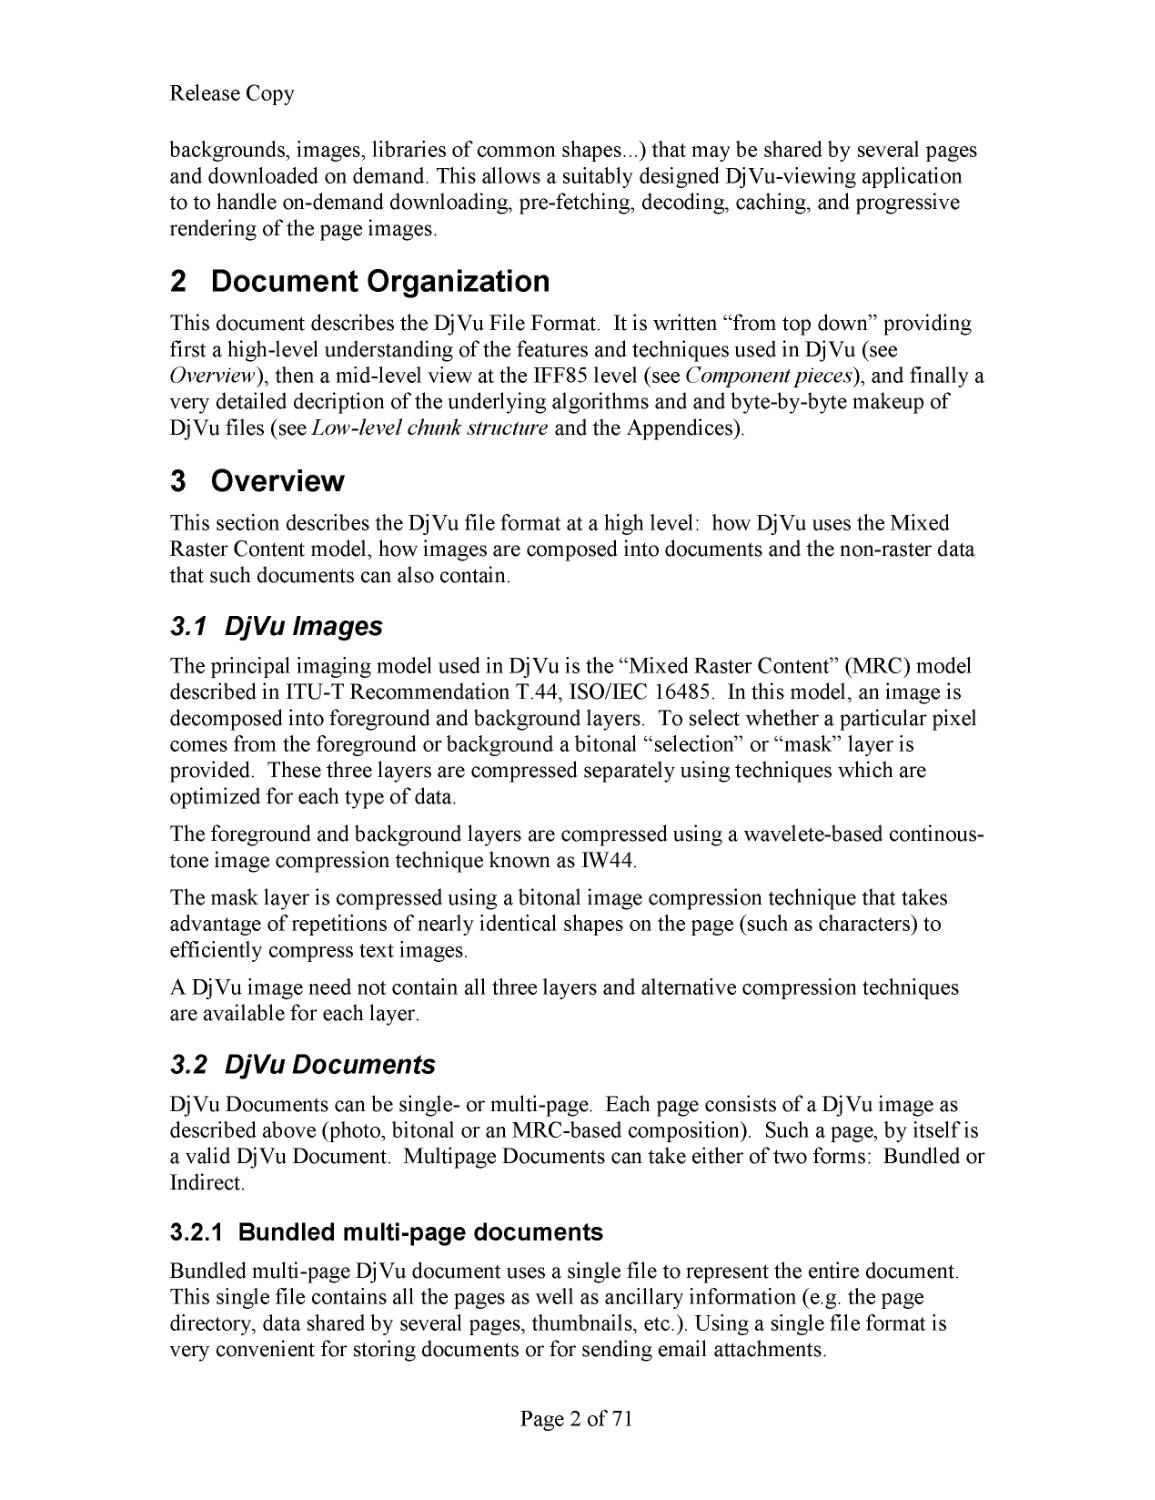 Document organization
Overview